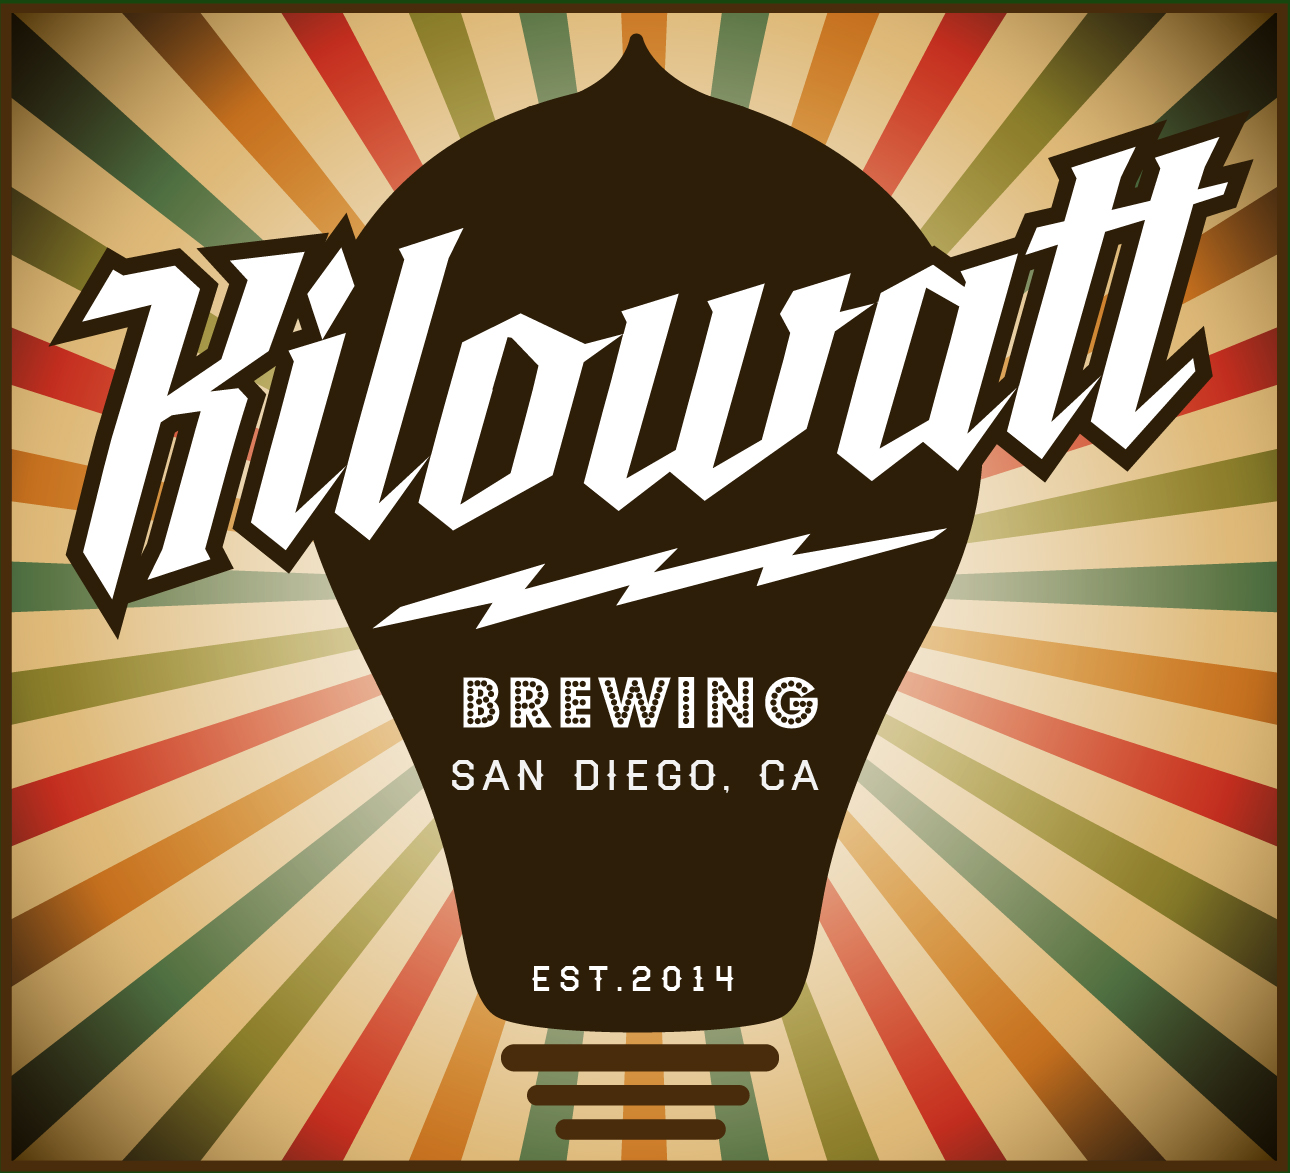 Meet Kilowatt Brewing Company | San Diego Reader